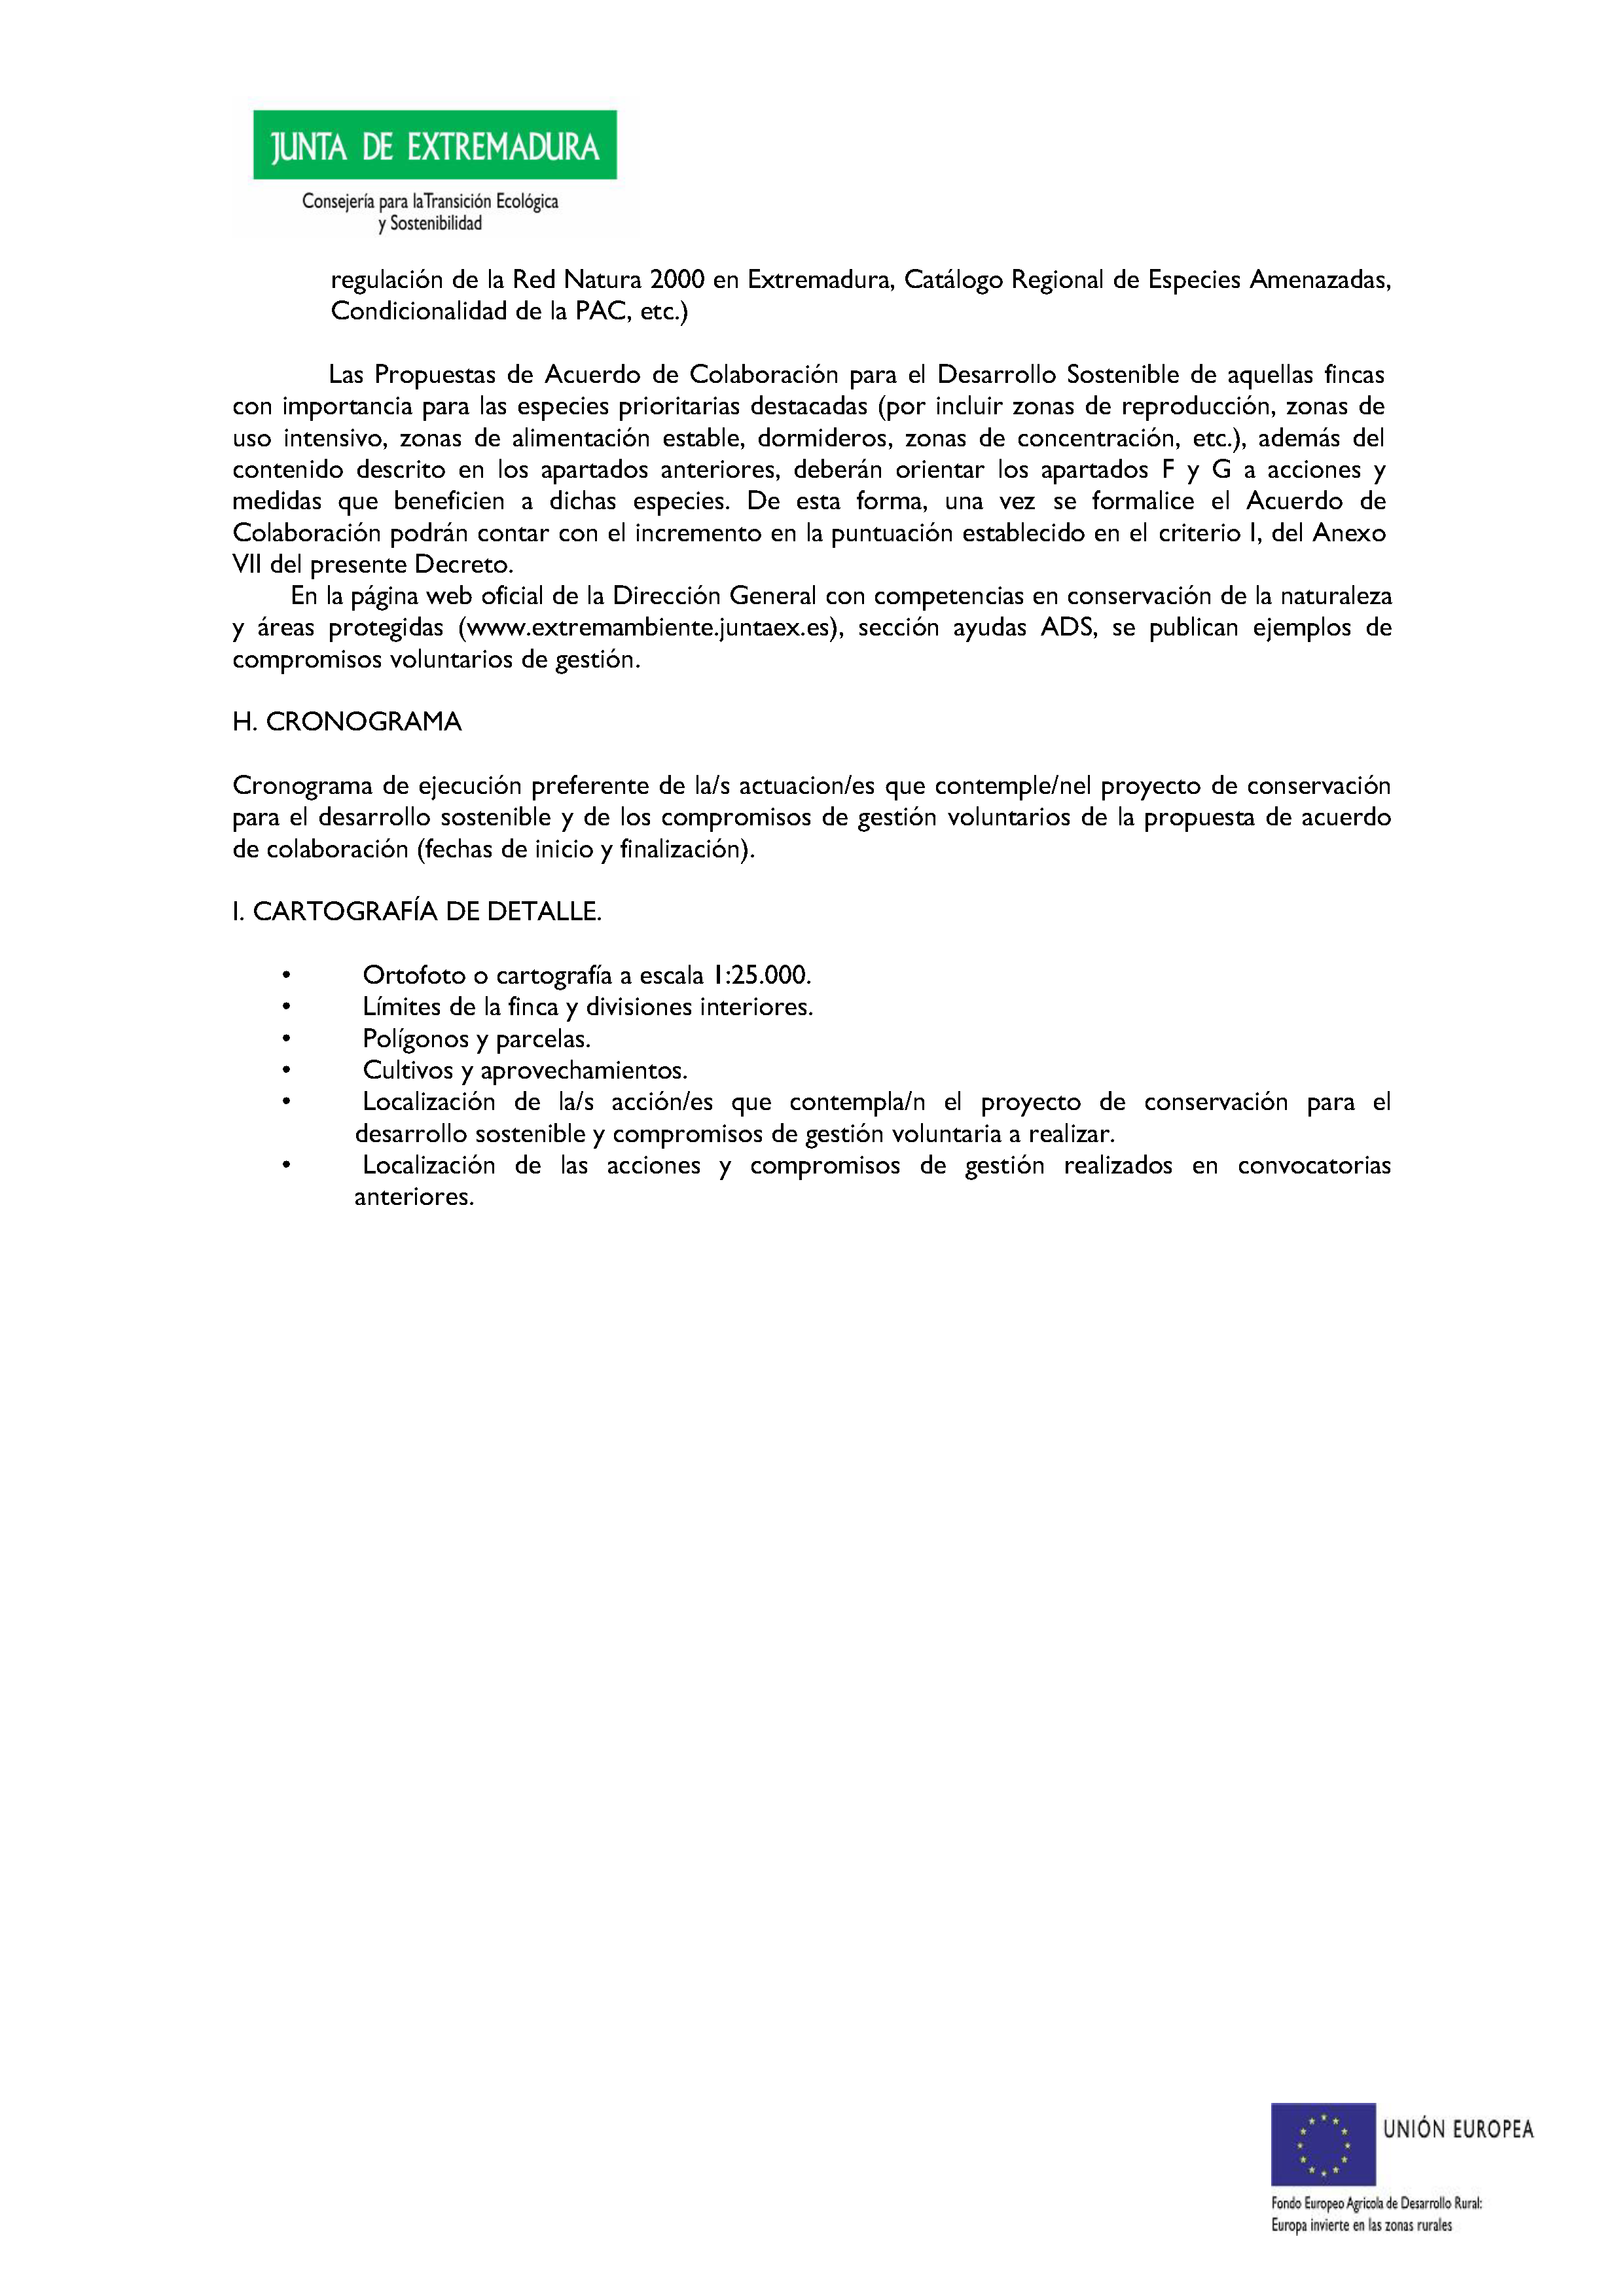 ANEXO VIII 1. PROPUESTA DE ACUERDO DE COLABORACIÓN PARA EL DESARROLLO SOSTENIBLE Pag 4